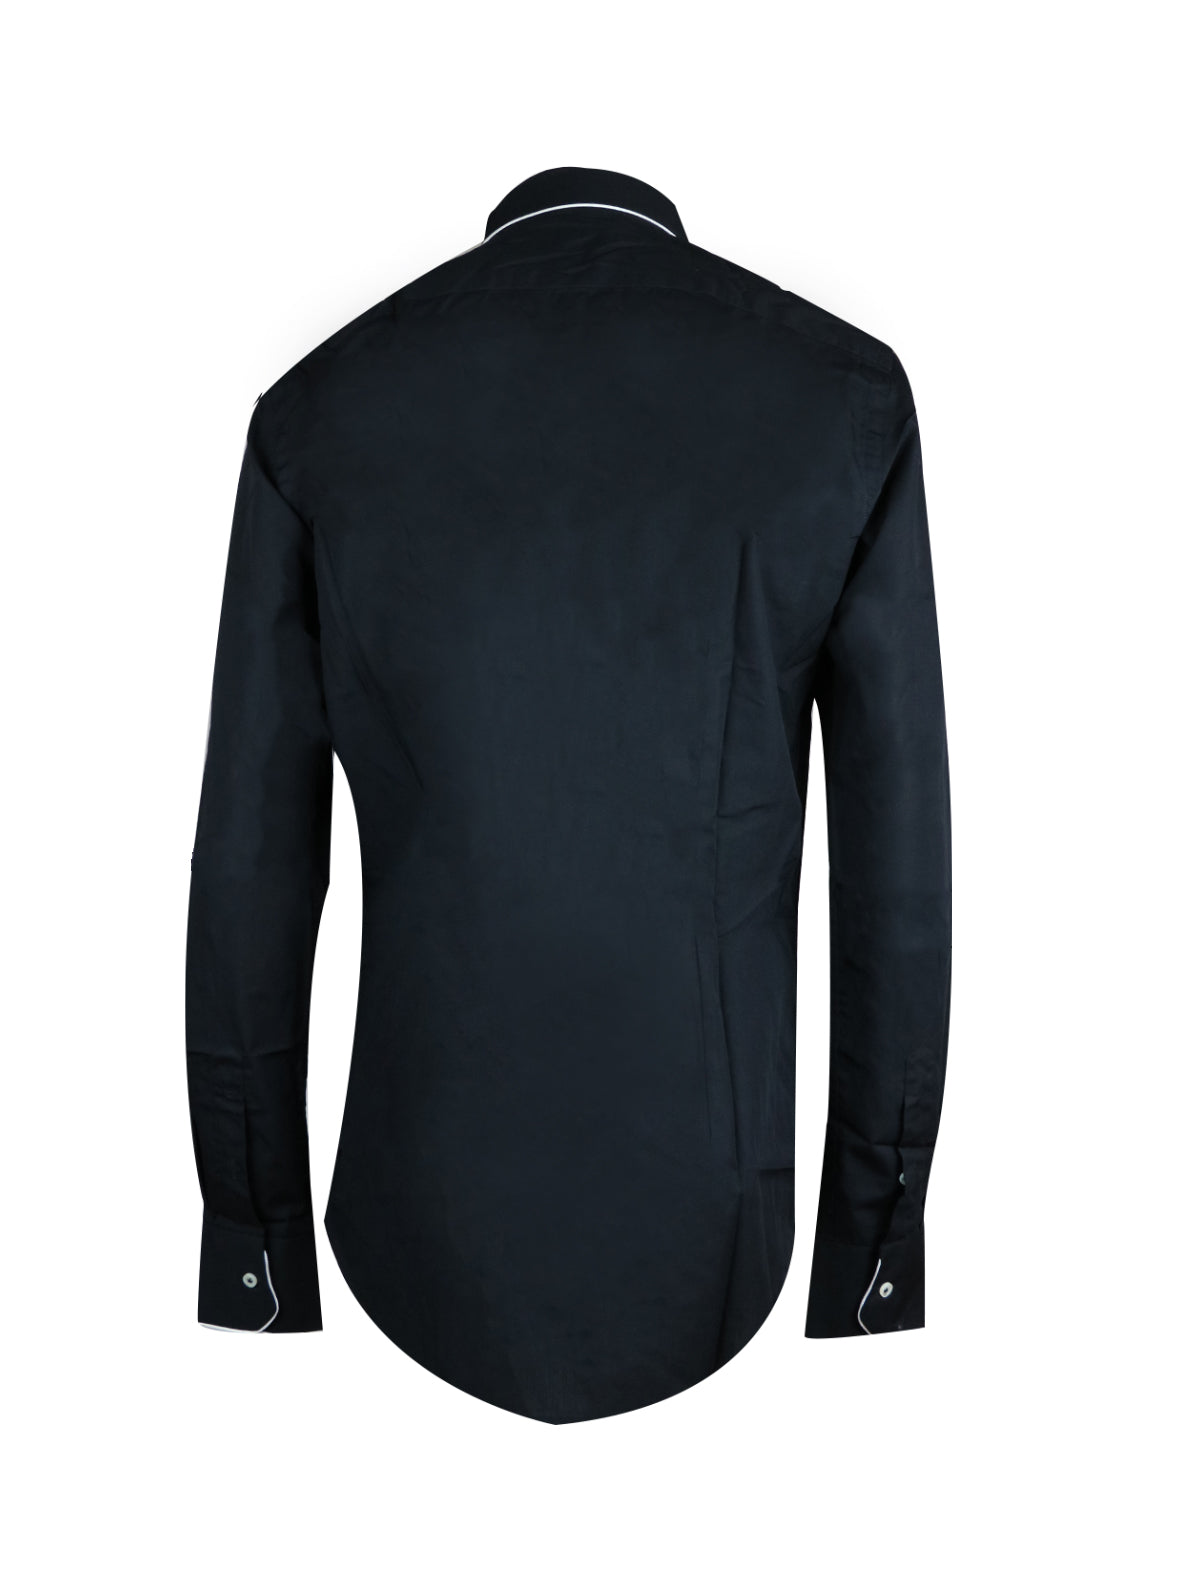 Gabriele Pasini Contrast Shirt in Black